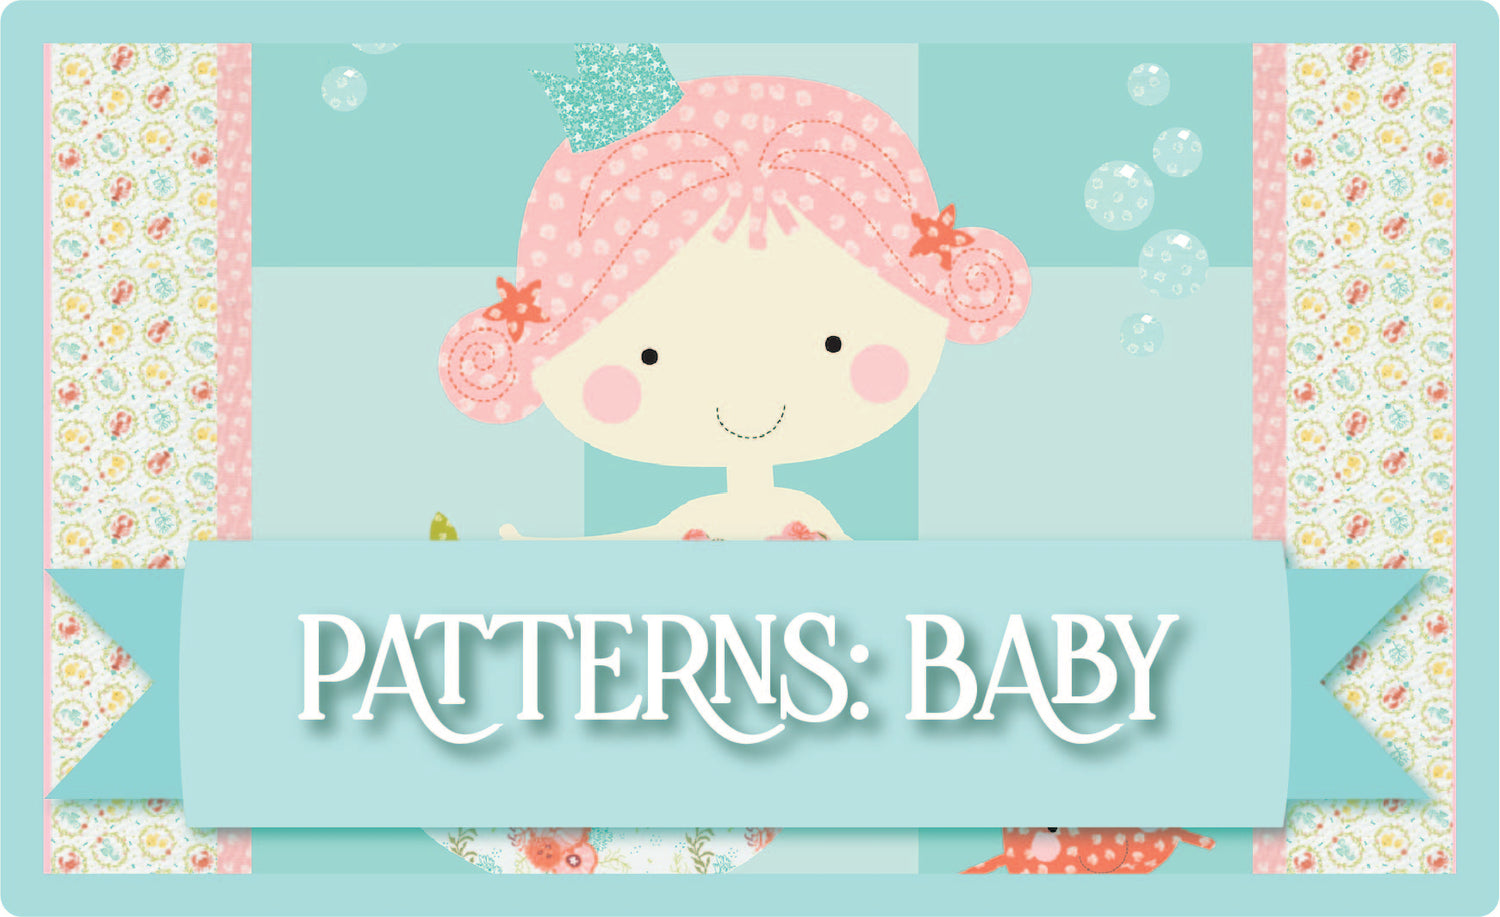 Quilt Patterns: Baby